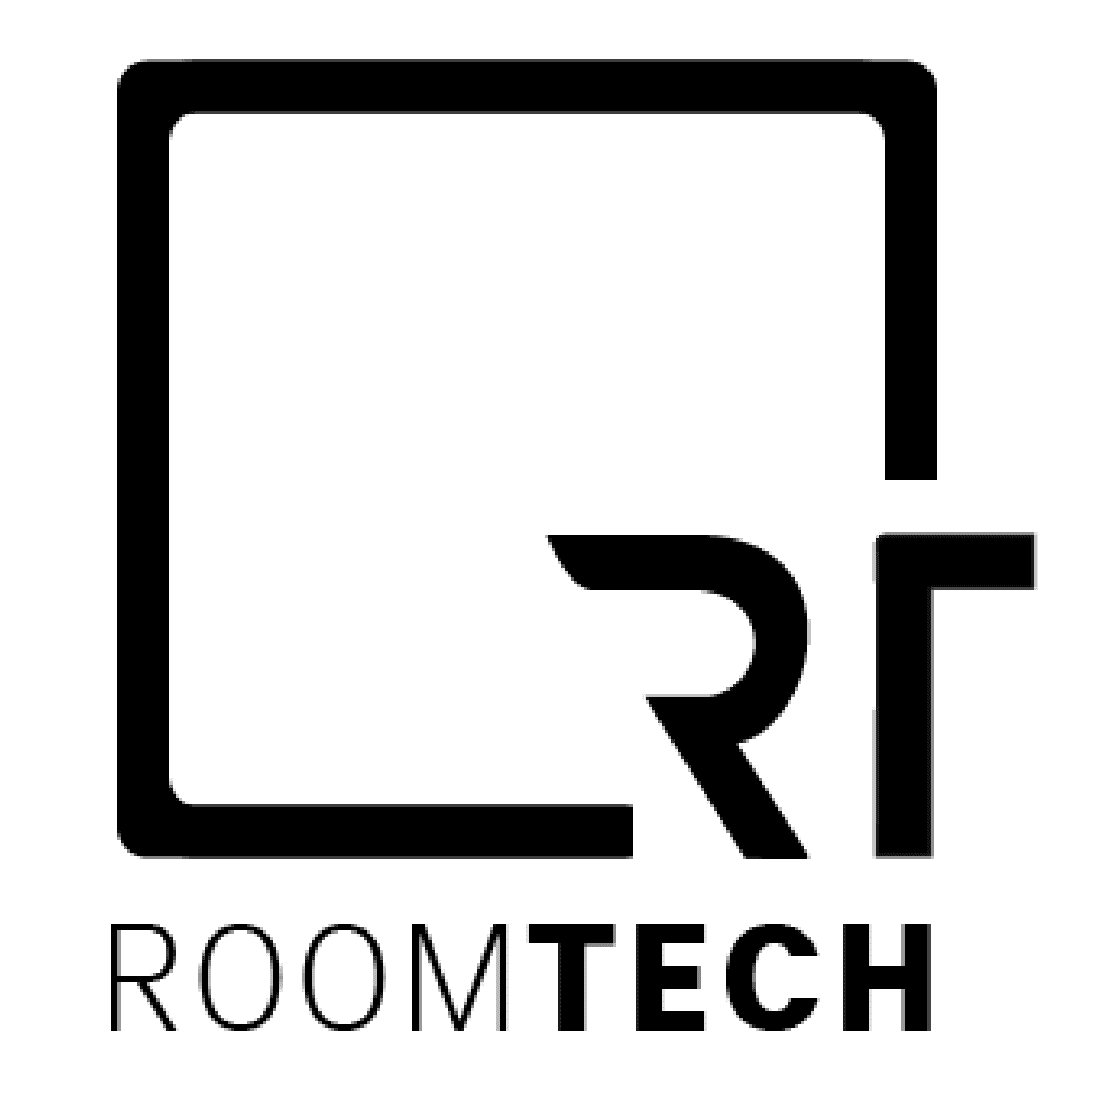 Roomtech